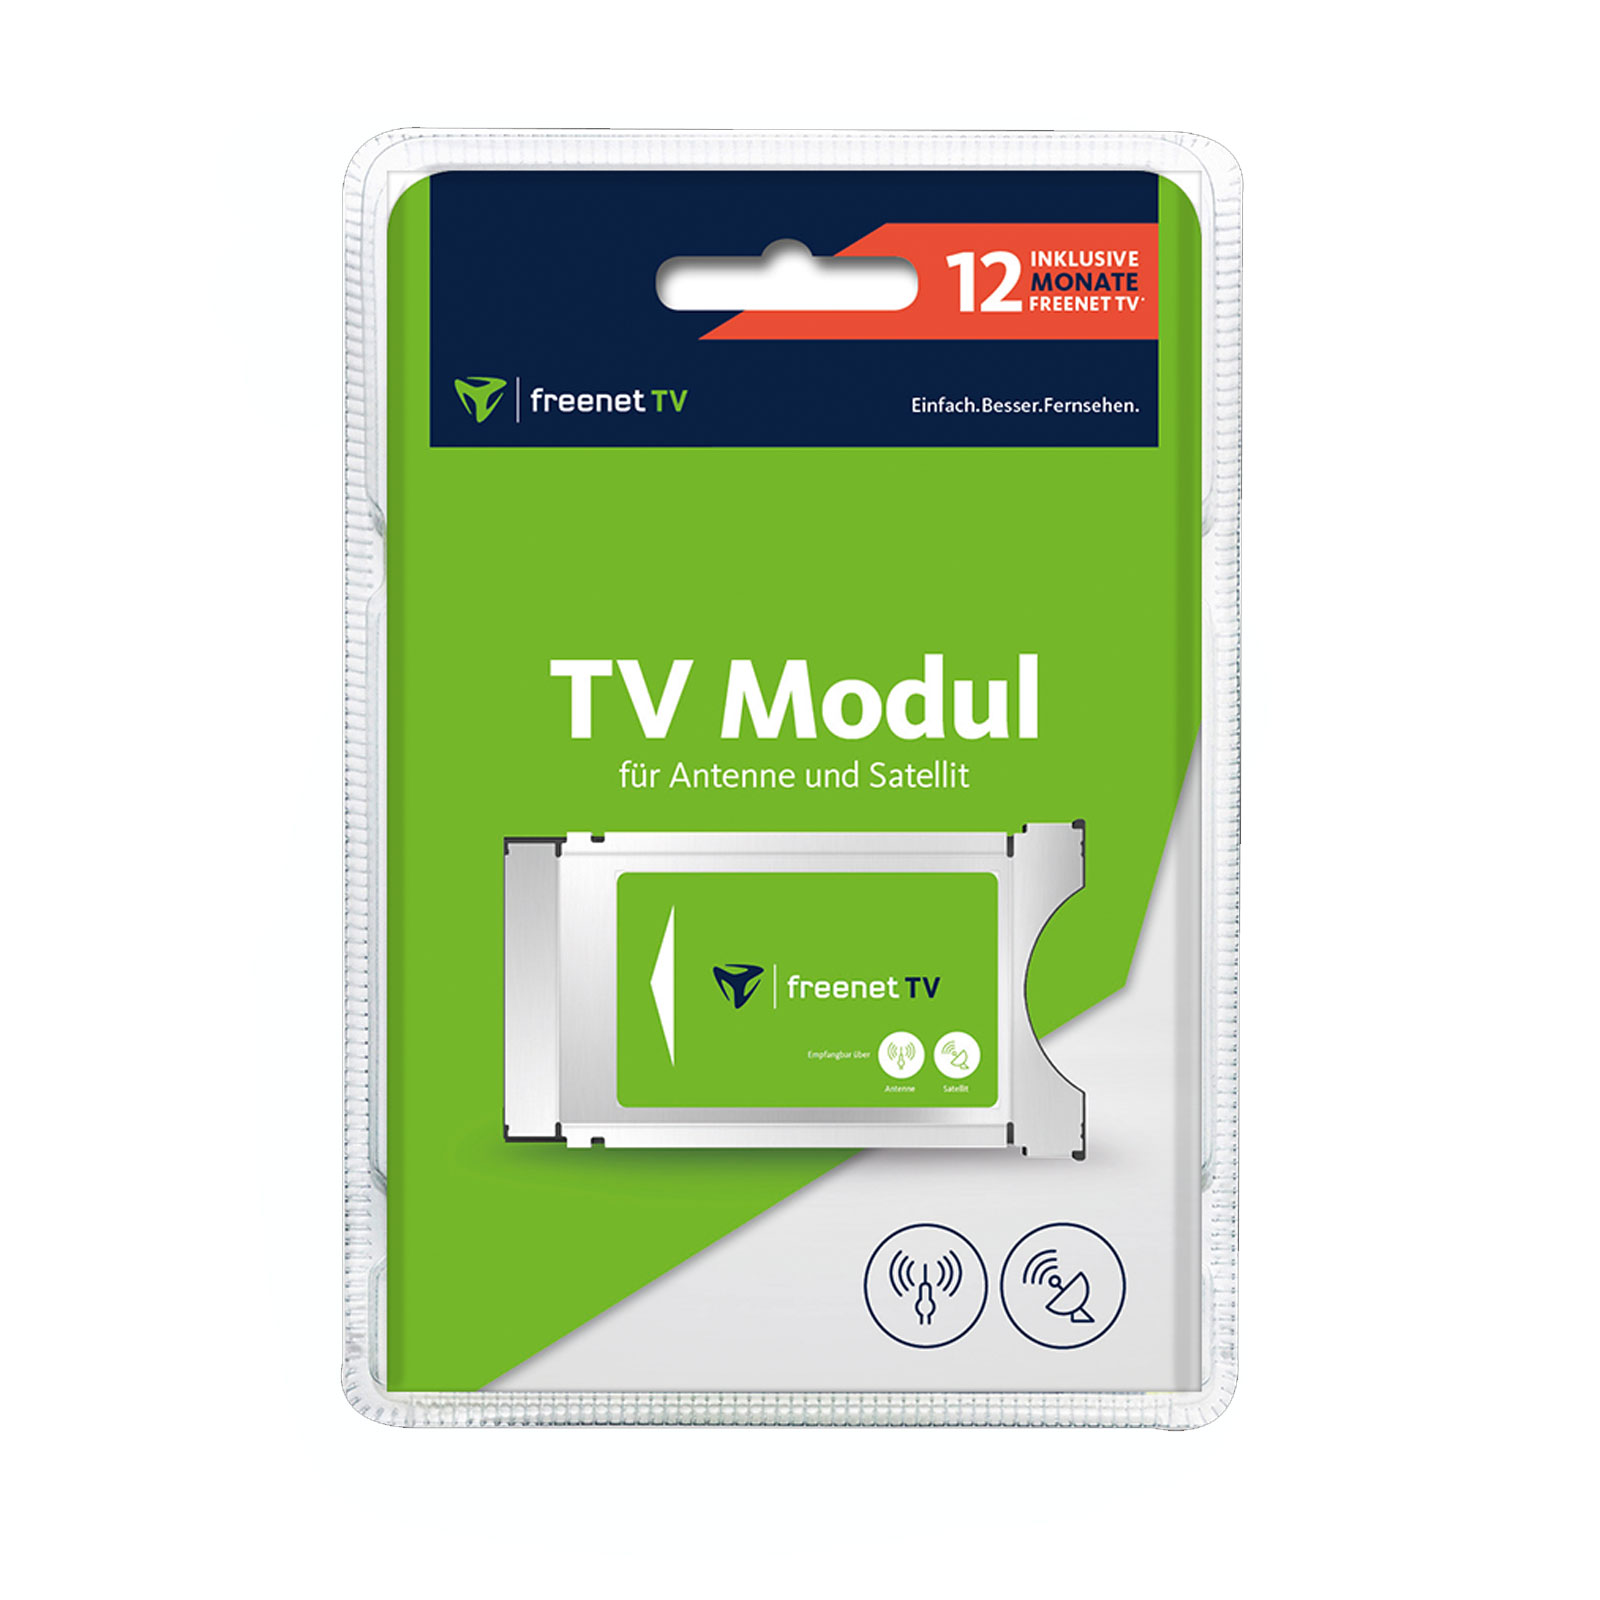 freenet TV CI+ Modul mit 12 Monate freenet TV